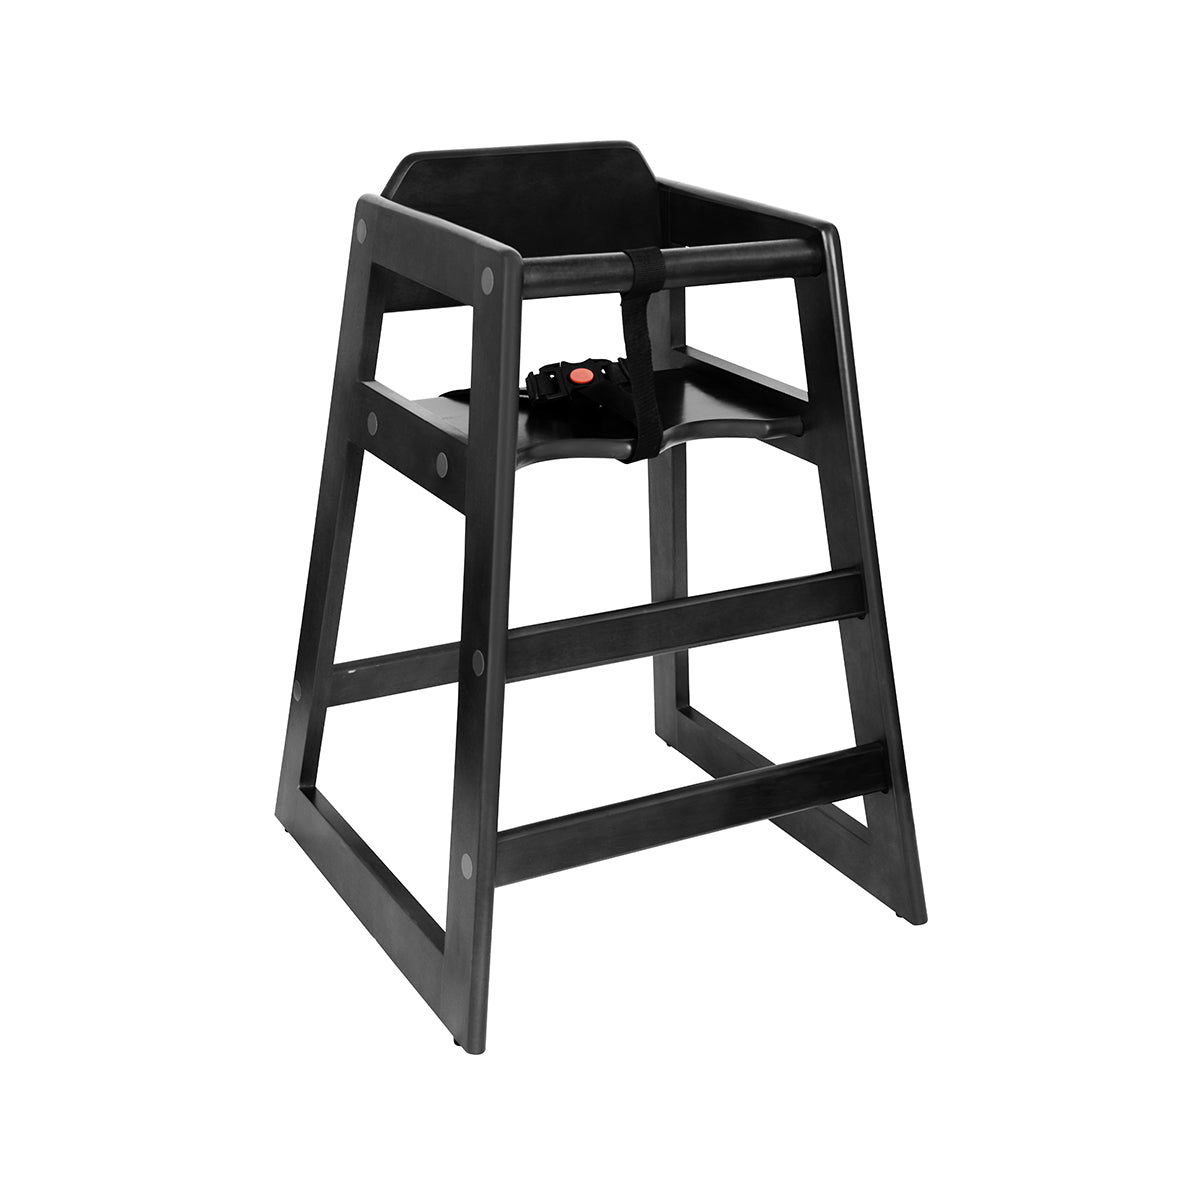 '09803 Chef Inox High Chair Black 513x502x733mm Tomkin Australia Hospitality Supplies